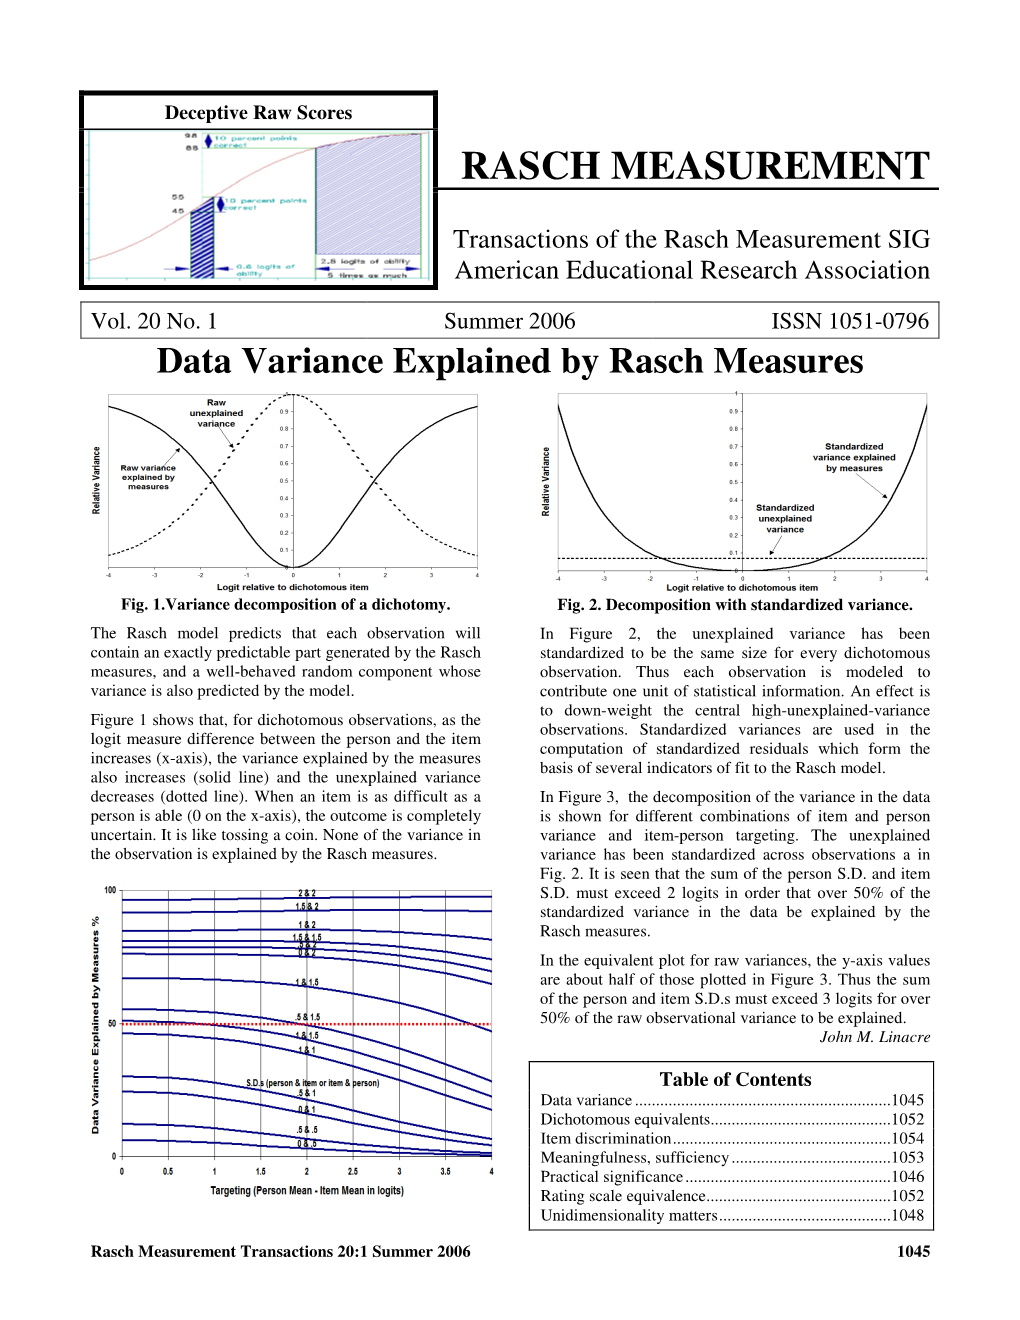 Rasch Measurement Transactions 20:1